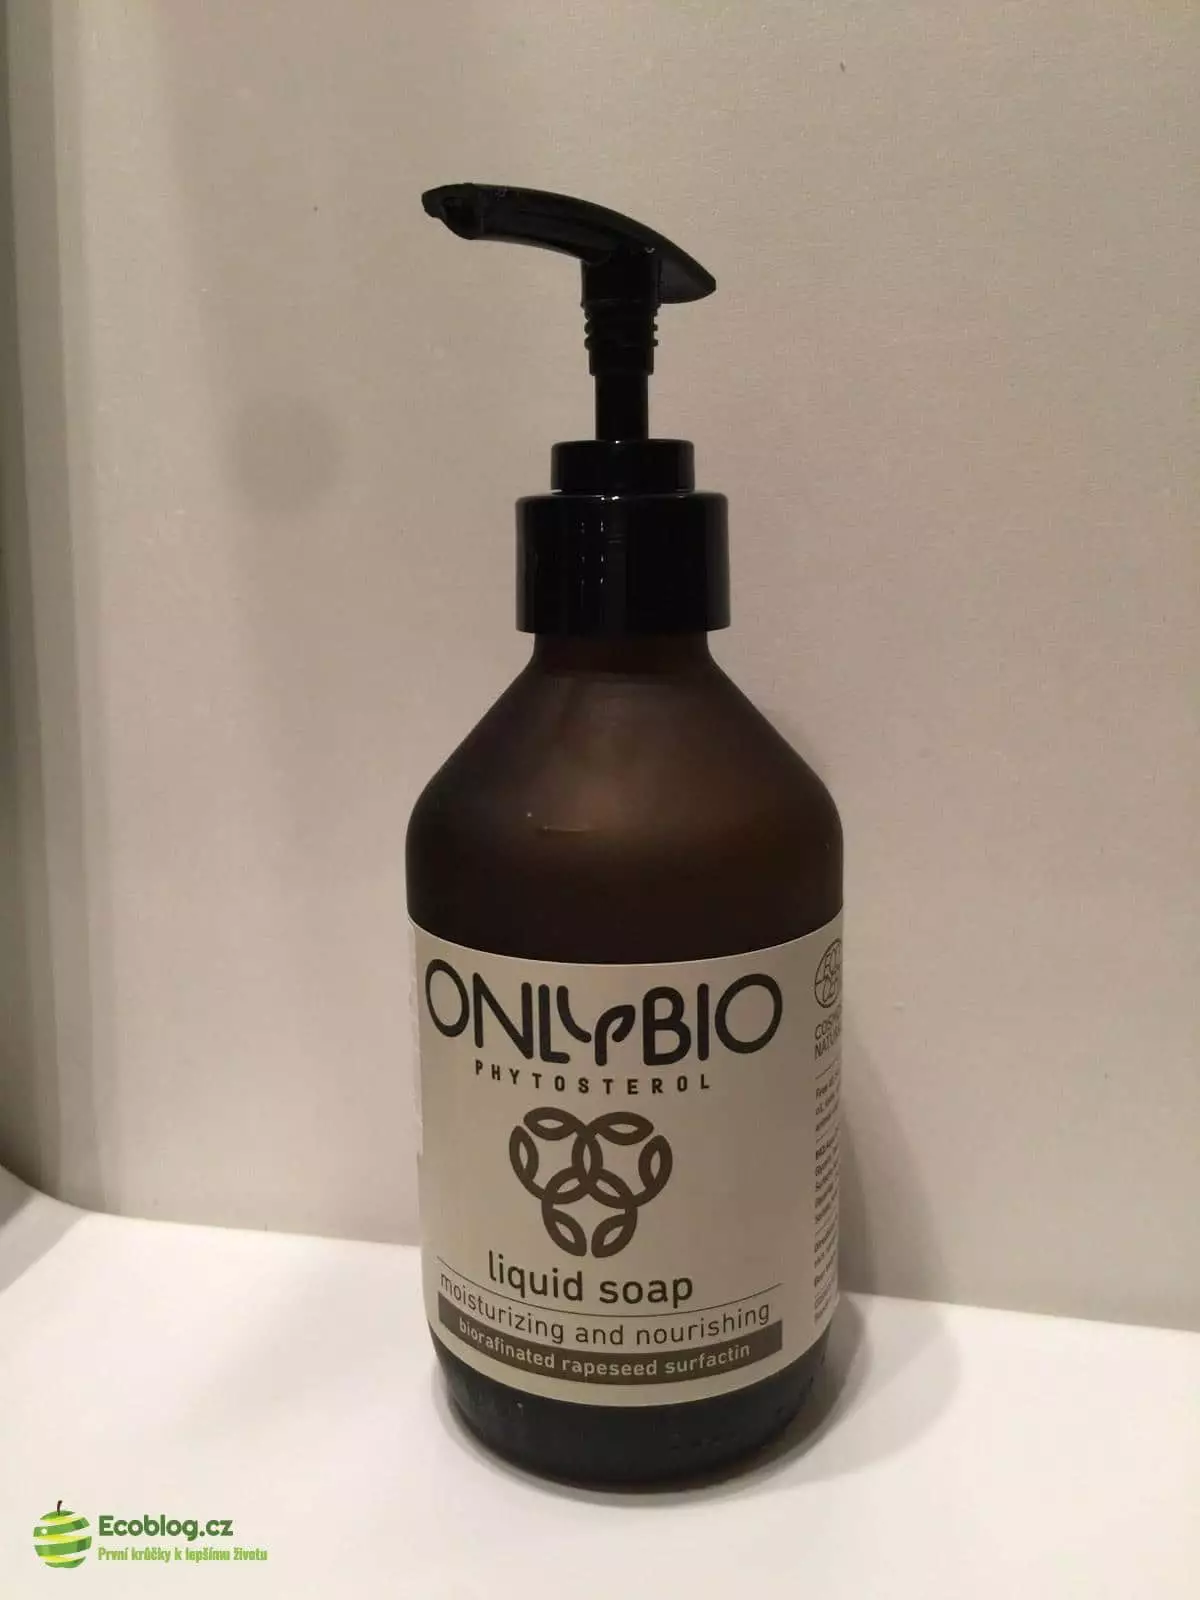 OnlyBio tekuté mýdlo recenze, zkušenost, test